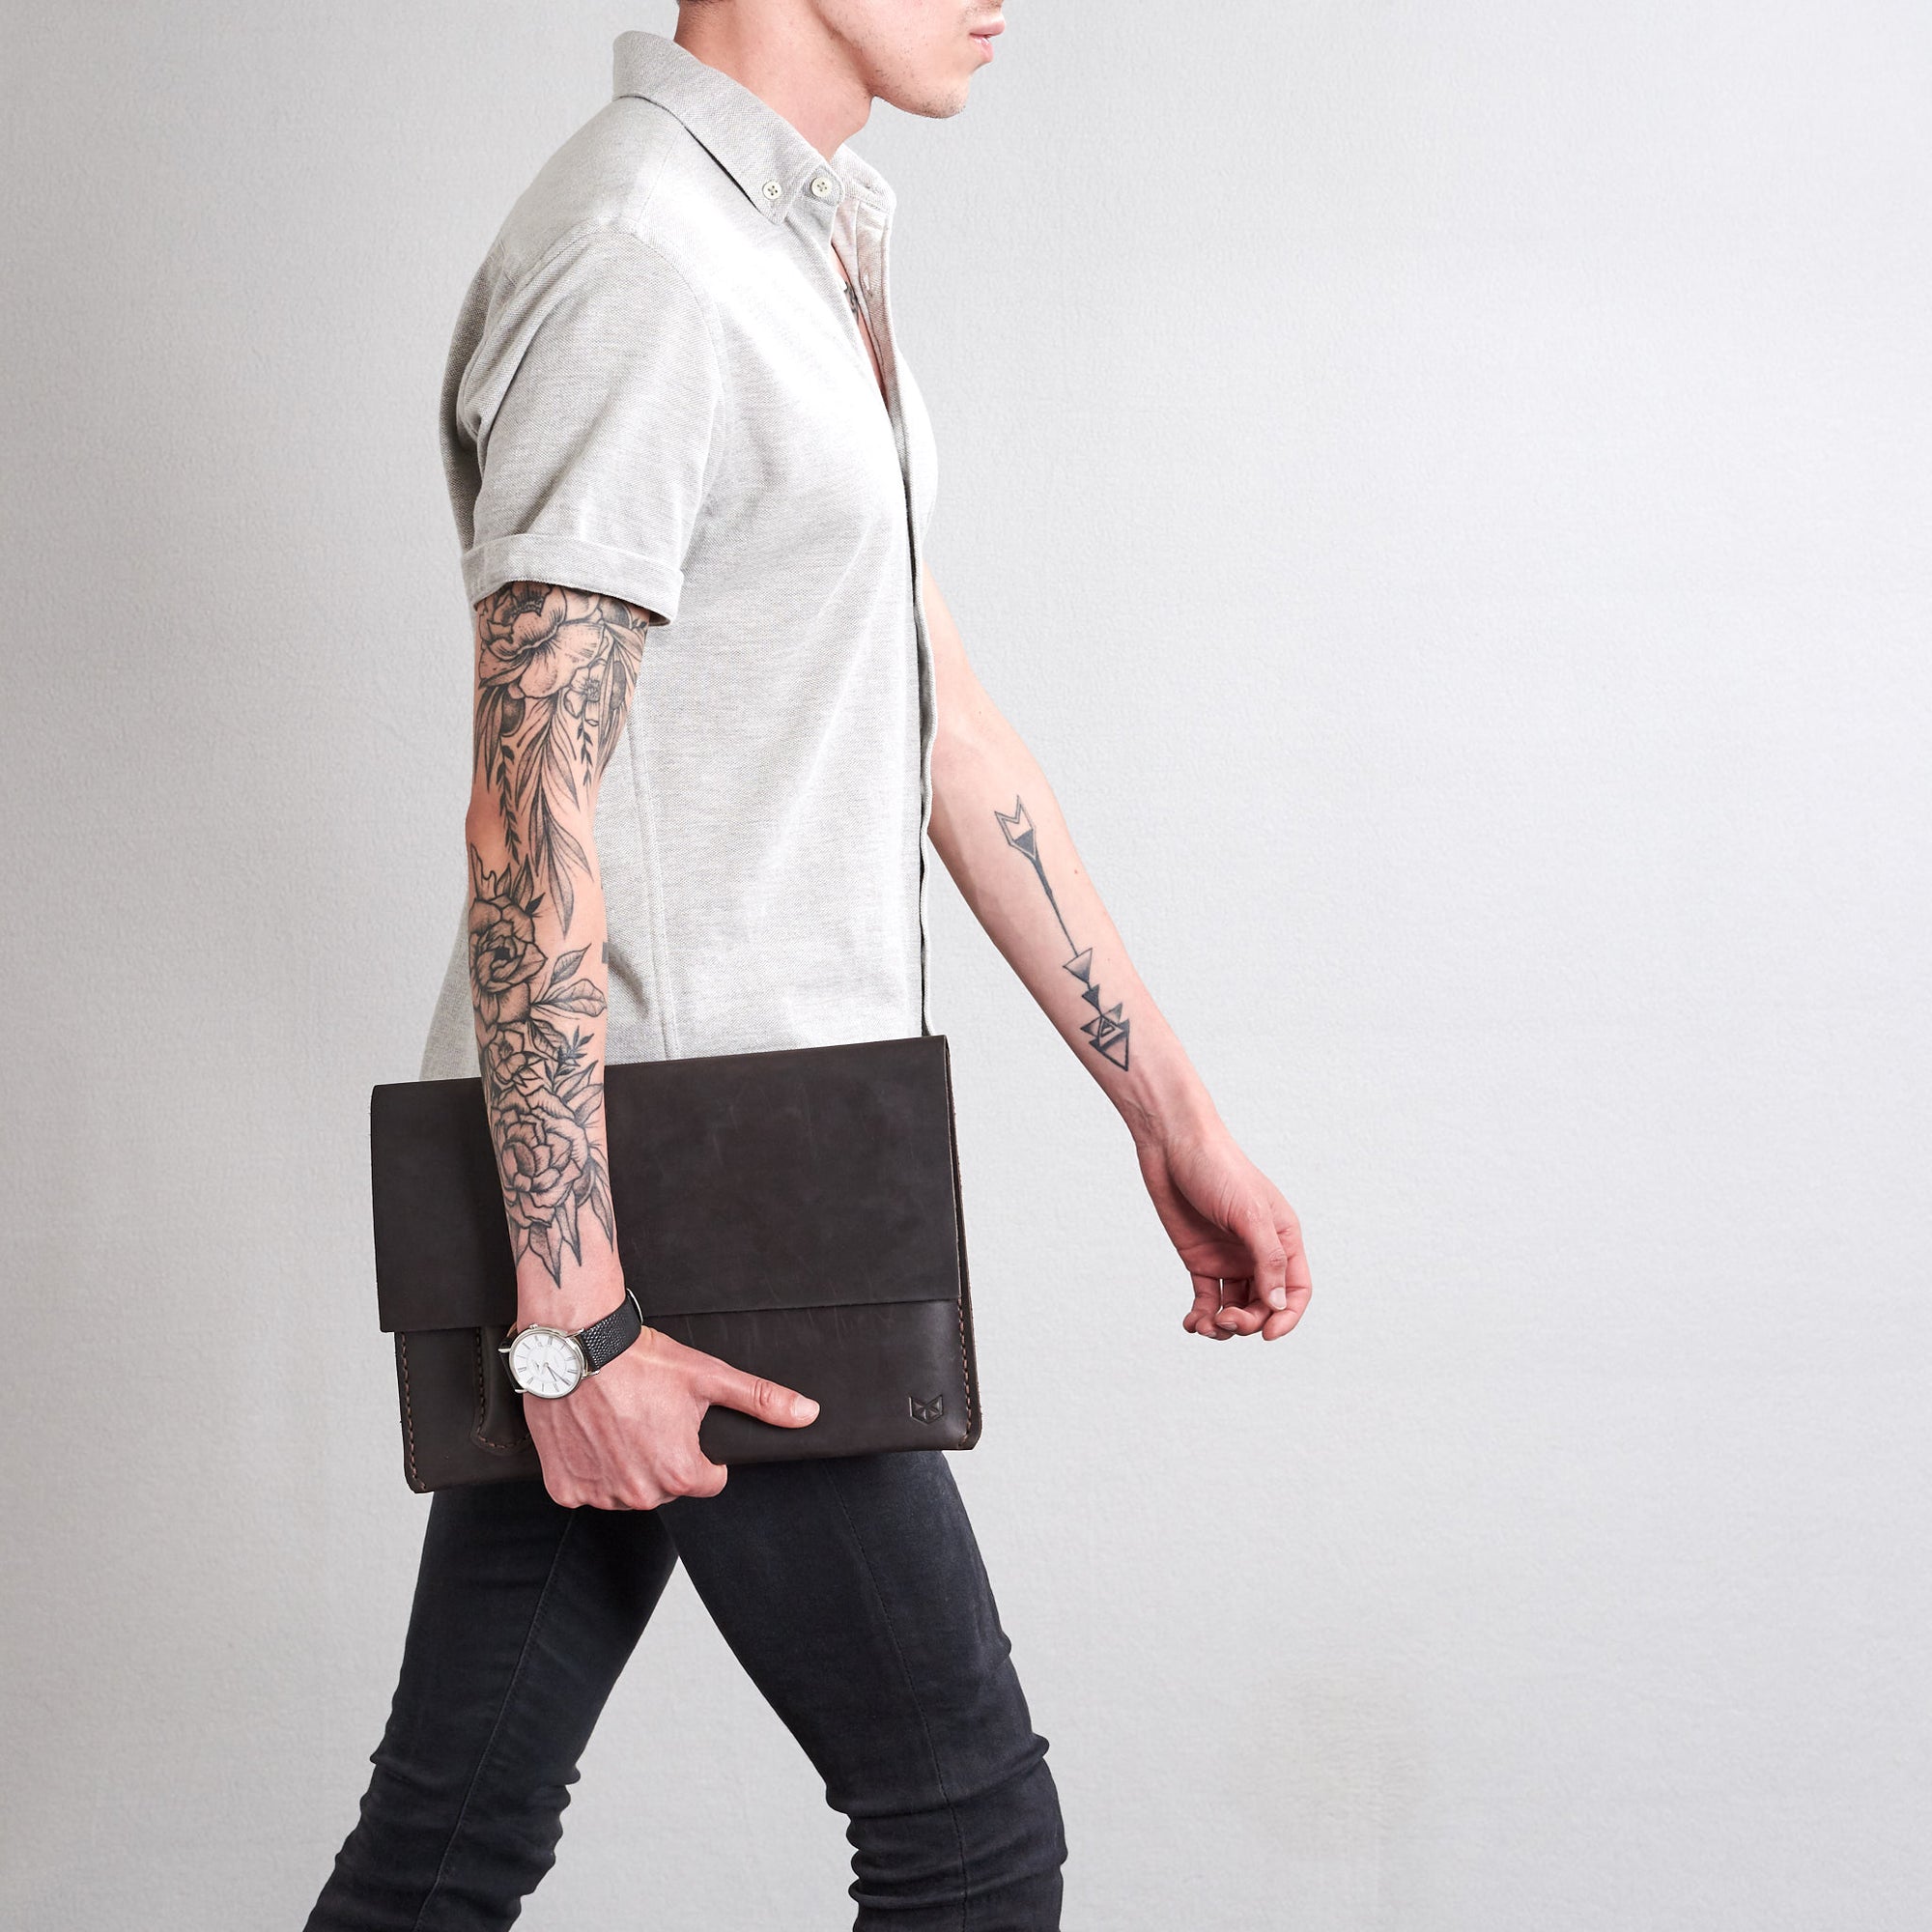 Style walking with case. Marron draftsman 2 case by Capra Leather. Google pixel sleeve.